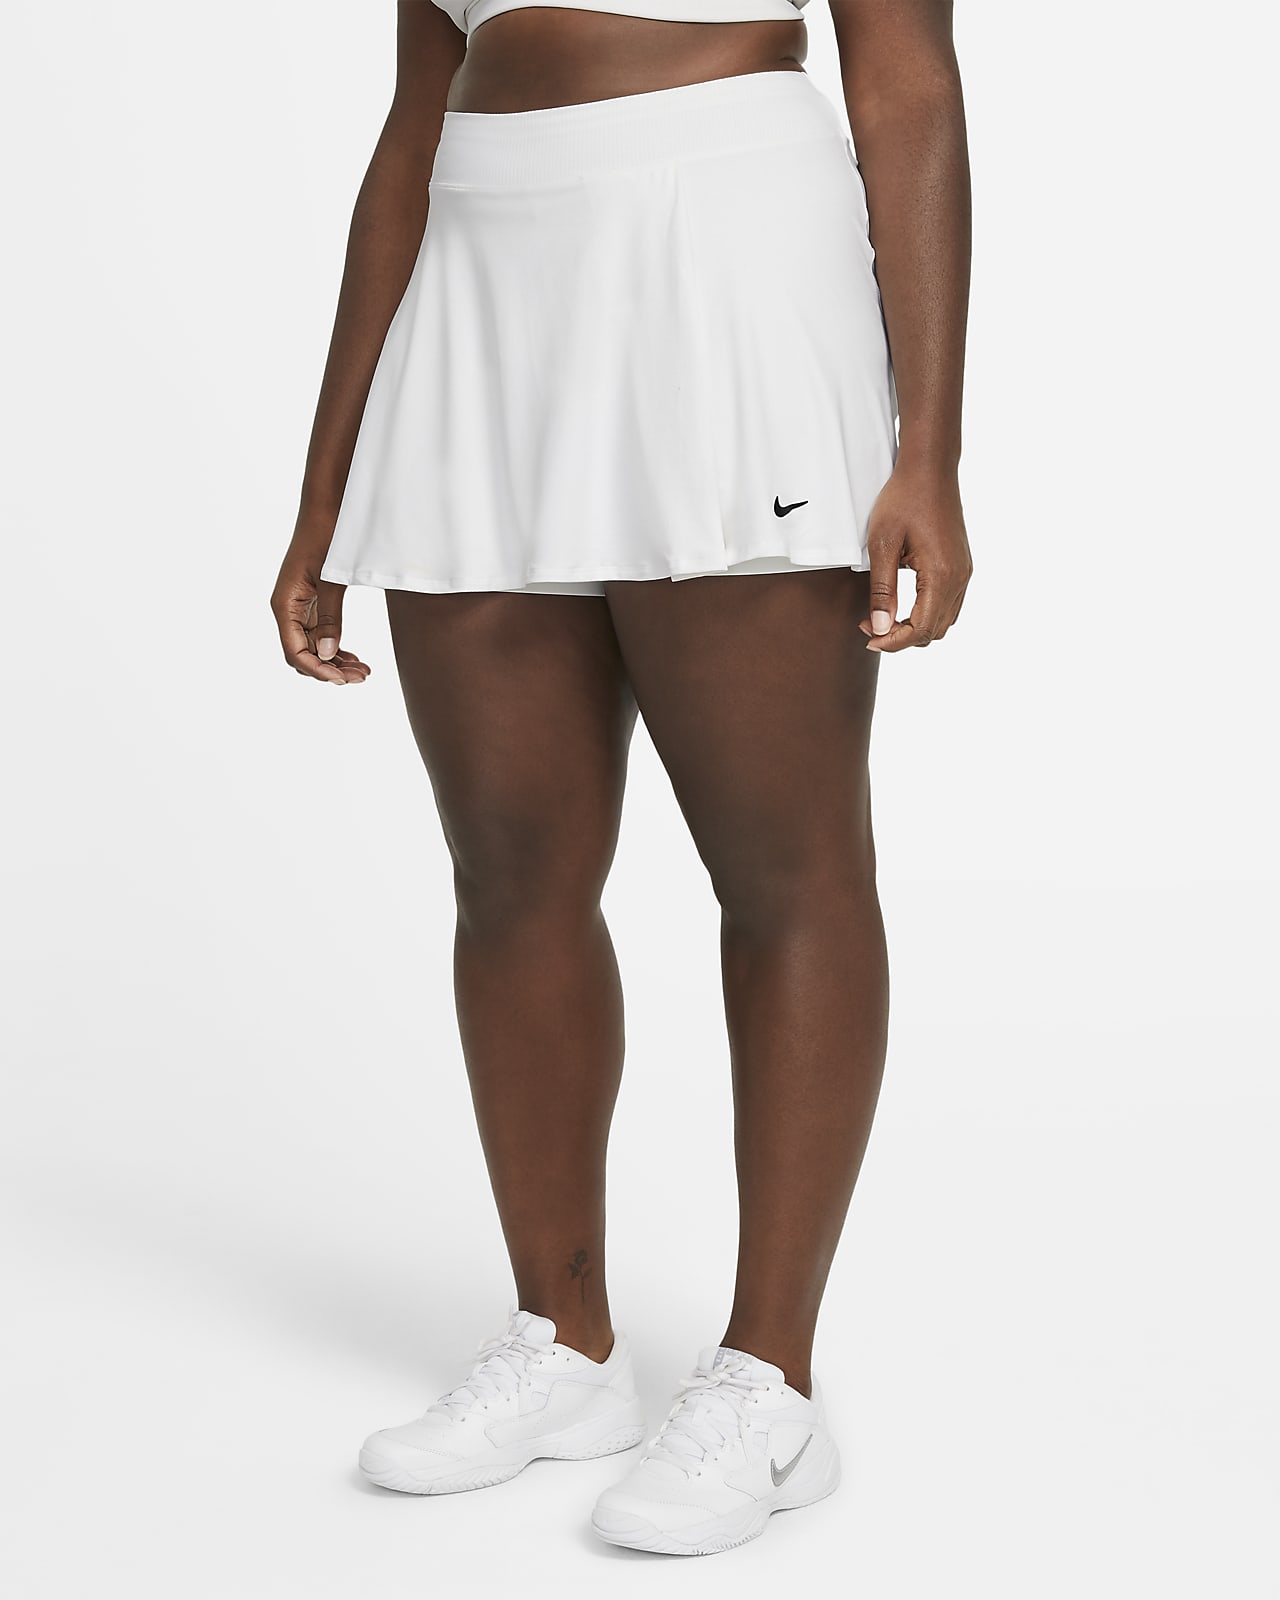 white nike court victory tennis skirt